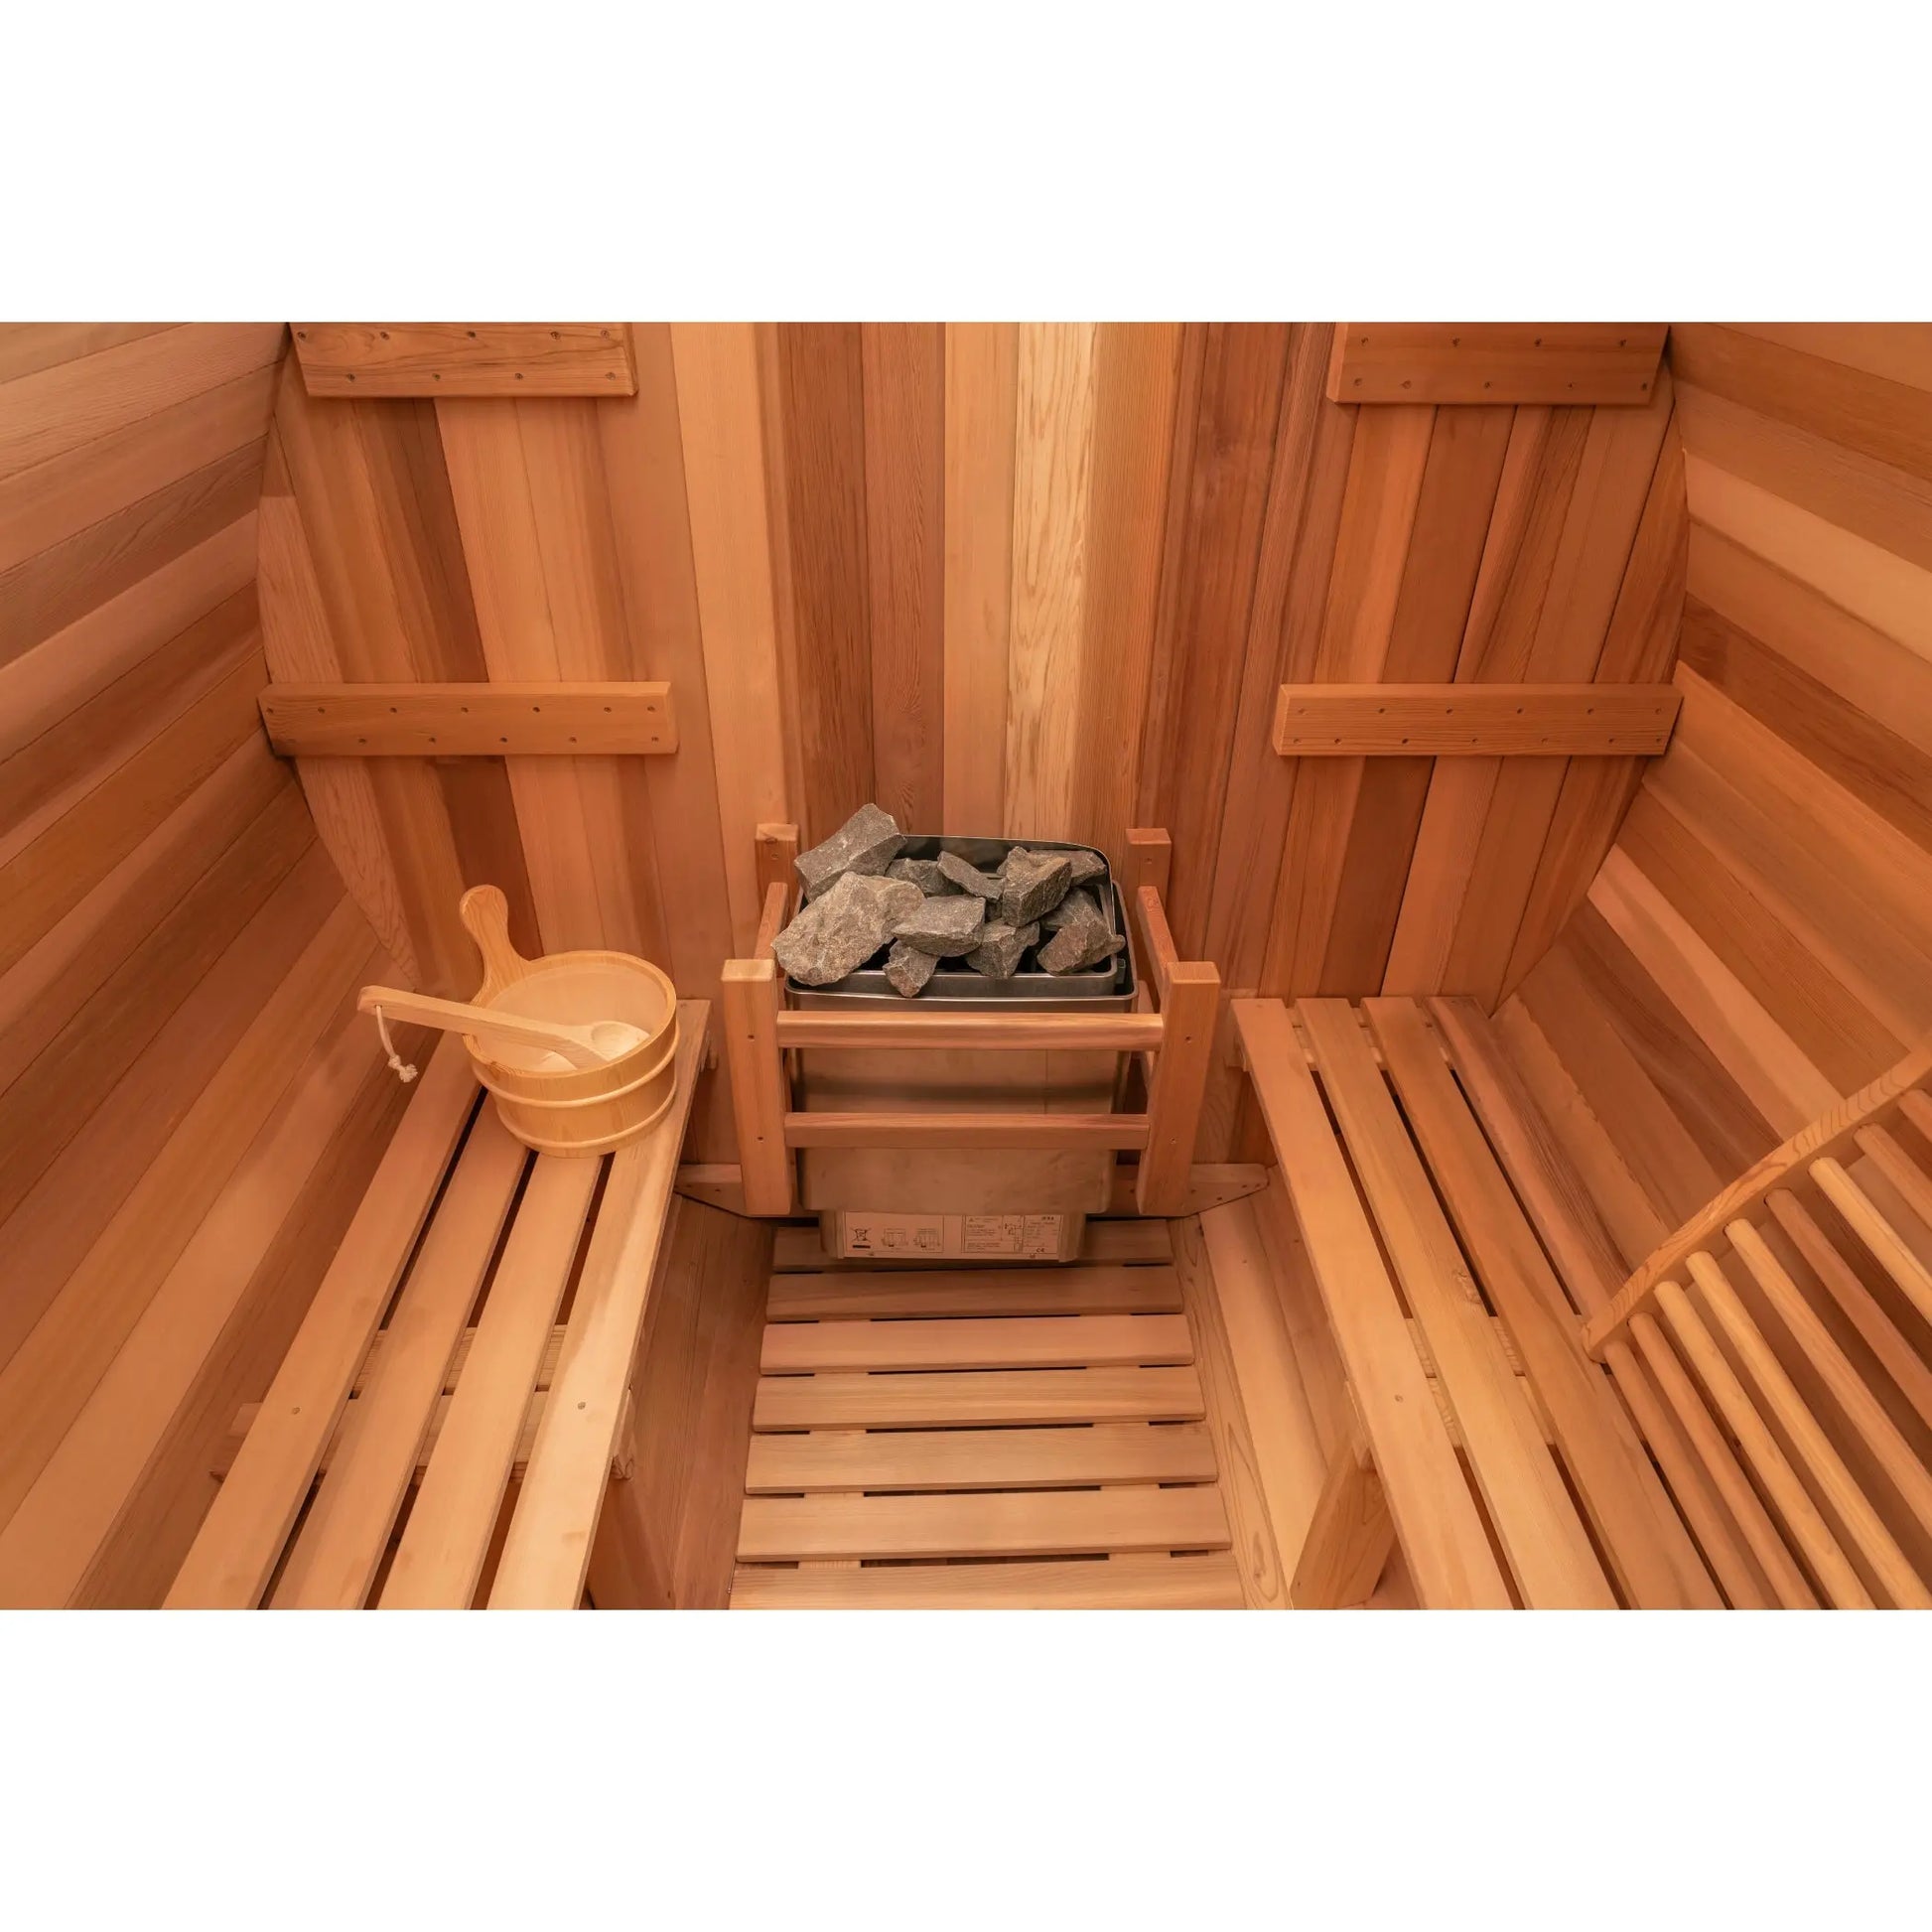 8 FT Classic Red Cedar Barrel Sauna - 6-8 Person Backcountry Recreation